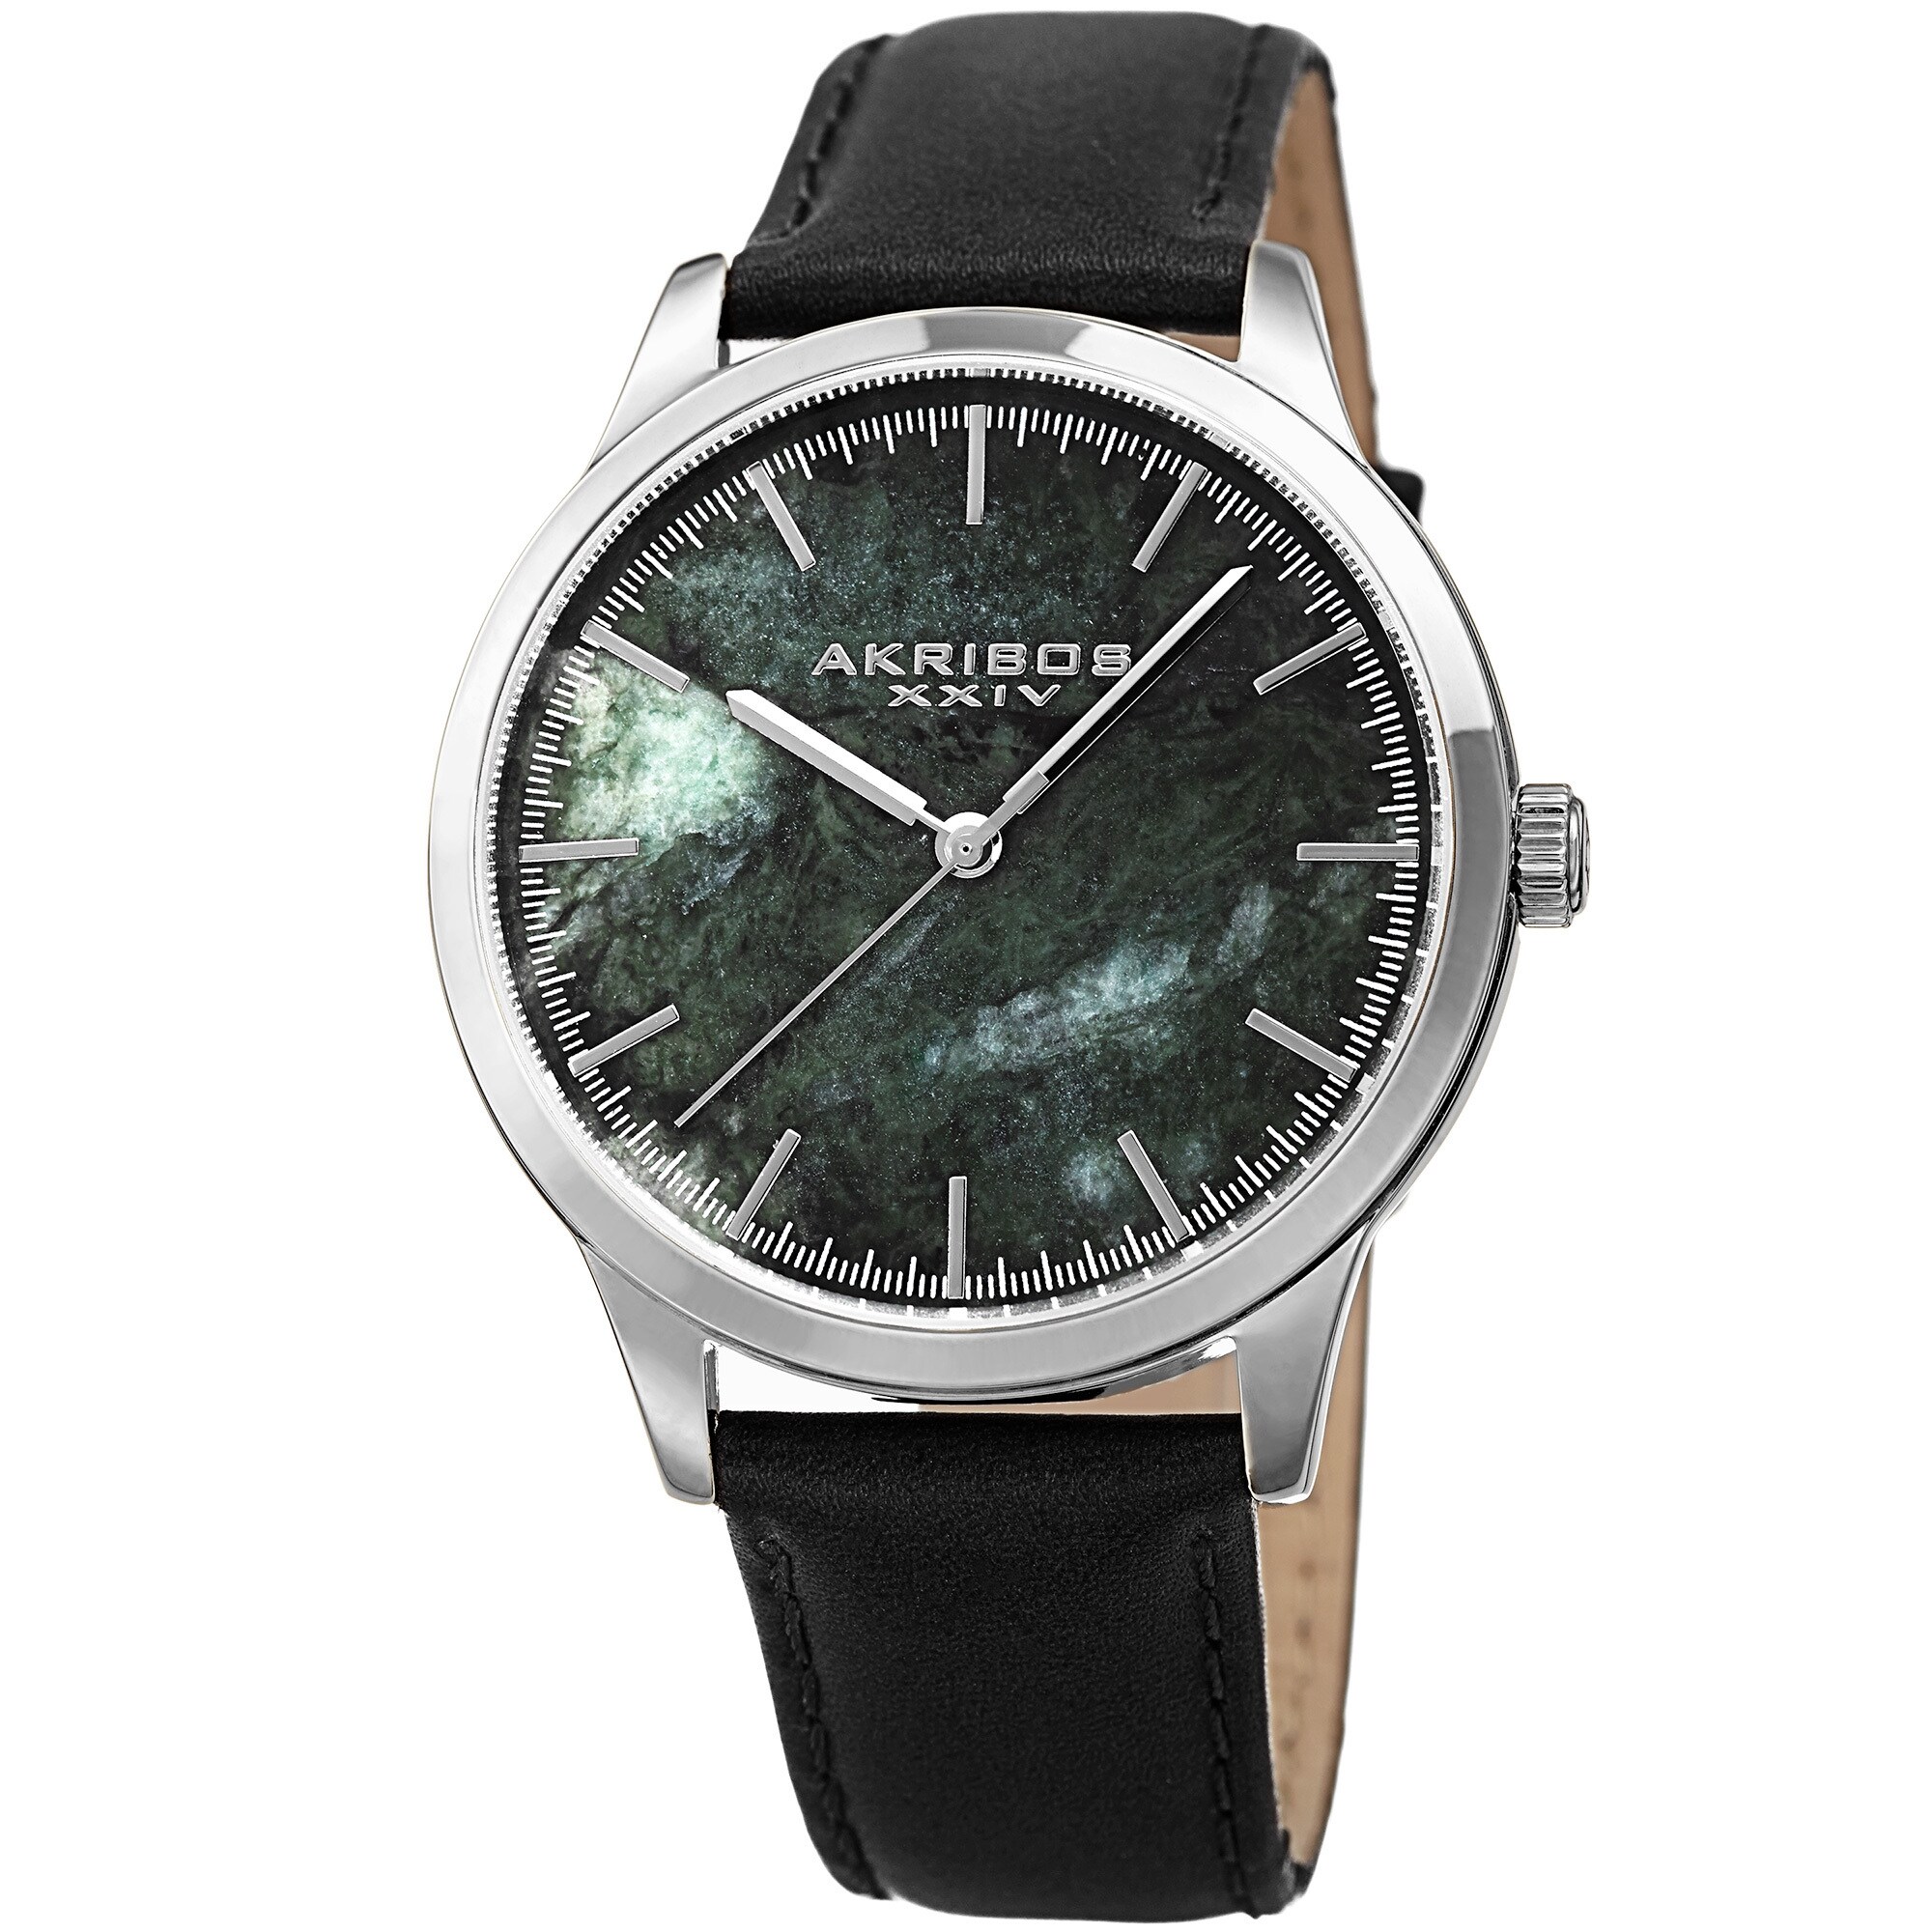 Akribos-XXIV-Mens-Quartz-Green-Marble-Leather-Strap-Watch-81d283f6-1c06-4433-8130-a6dd2192b5d1.jpg